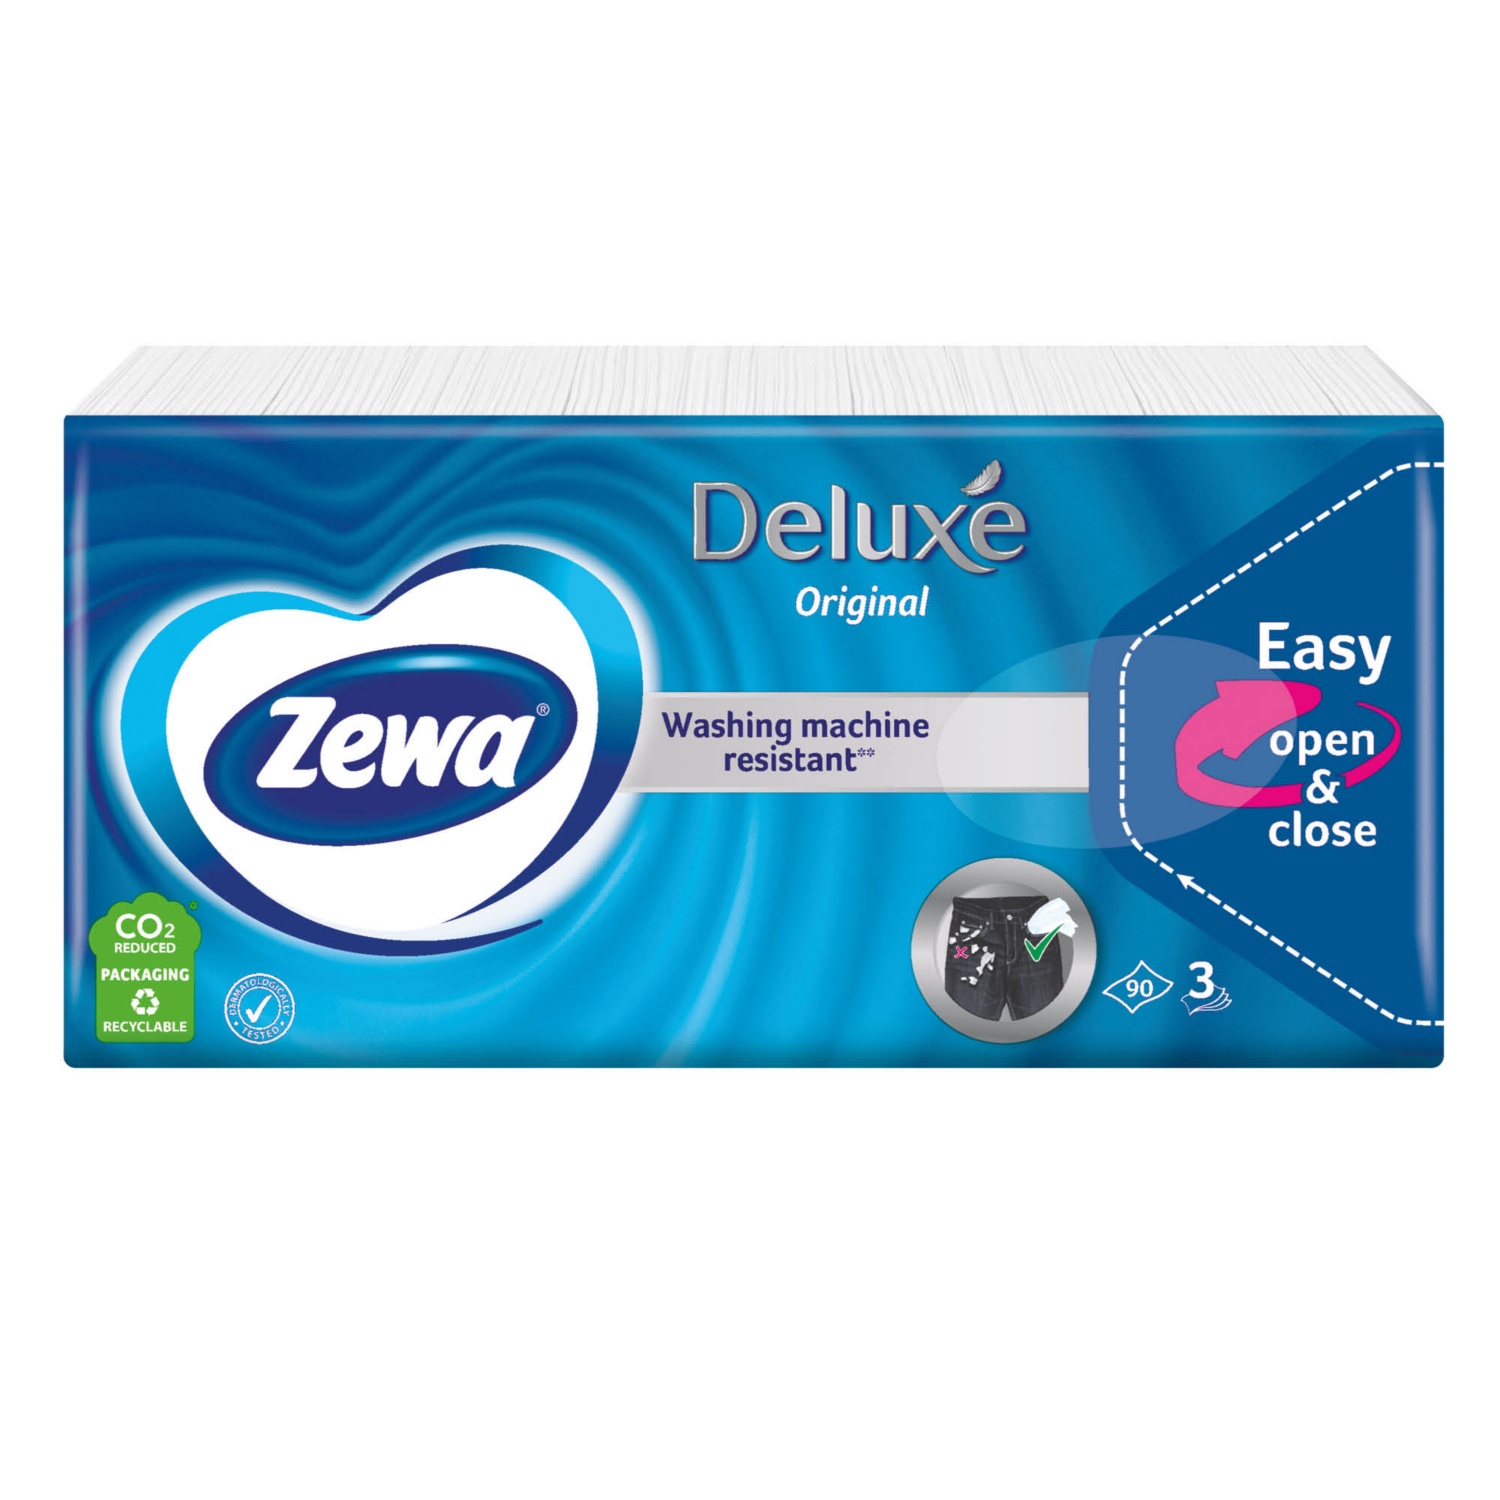 ZEWA Deluxe papírzsebkendő, 90 darab